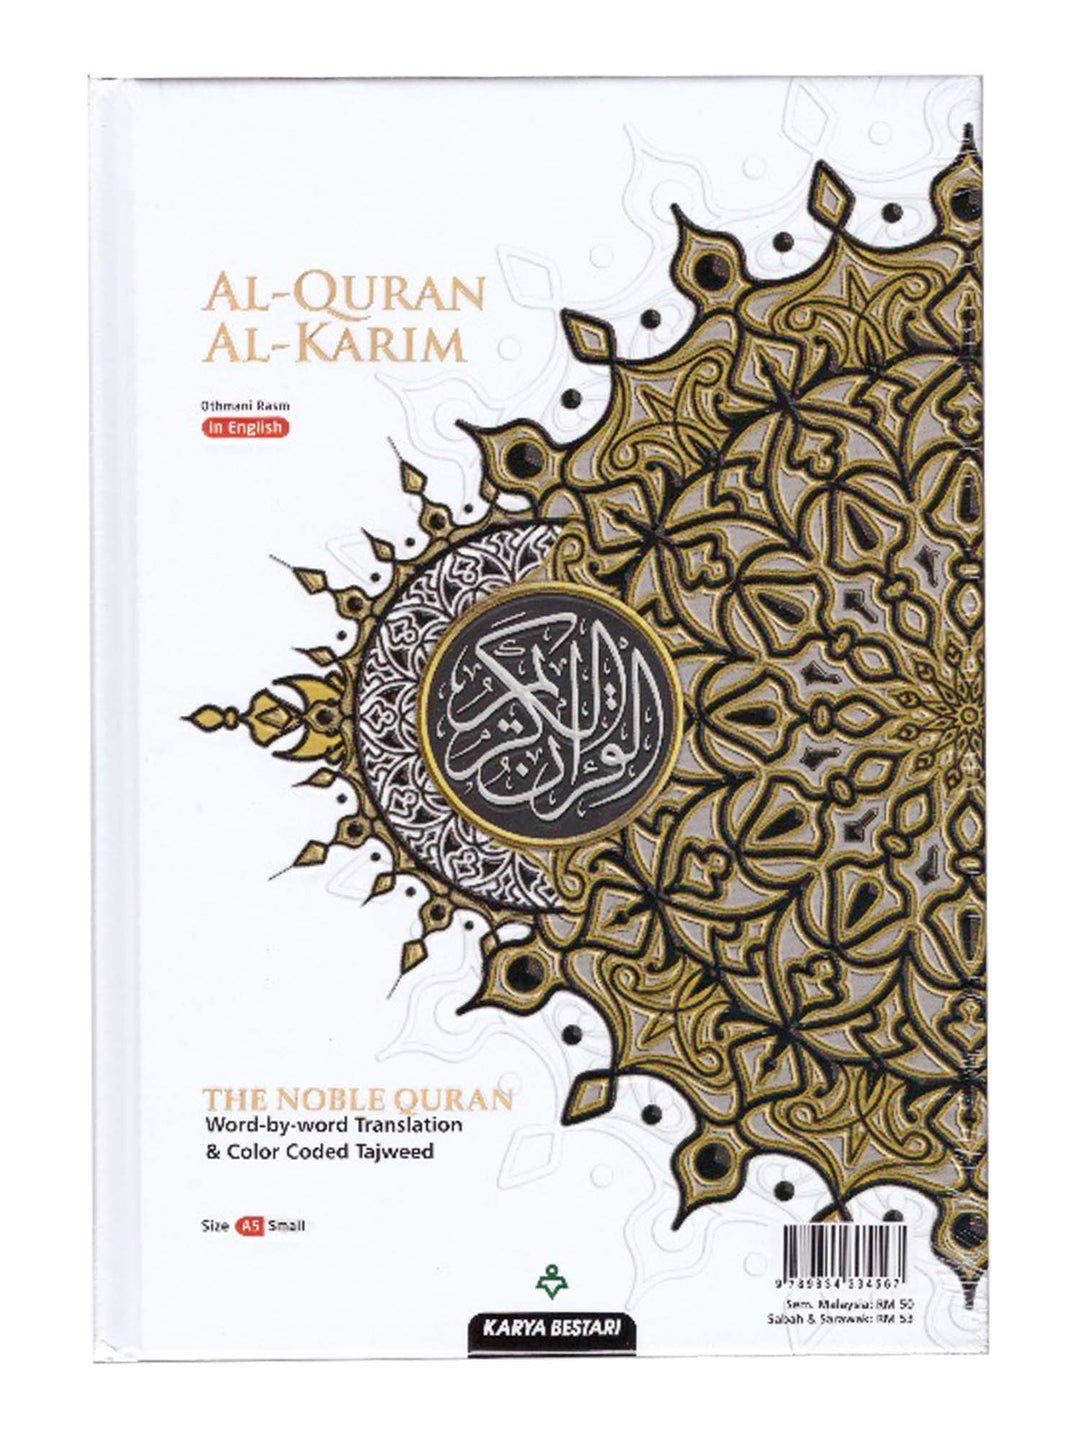 Al Quran Al Karim - The Noble Quran - Word By Word Translation - Size A5 Small (Hardback)